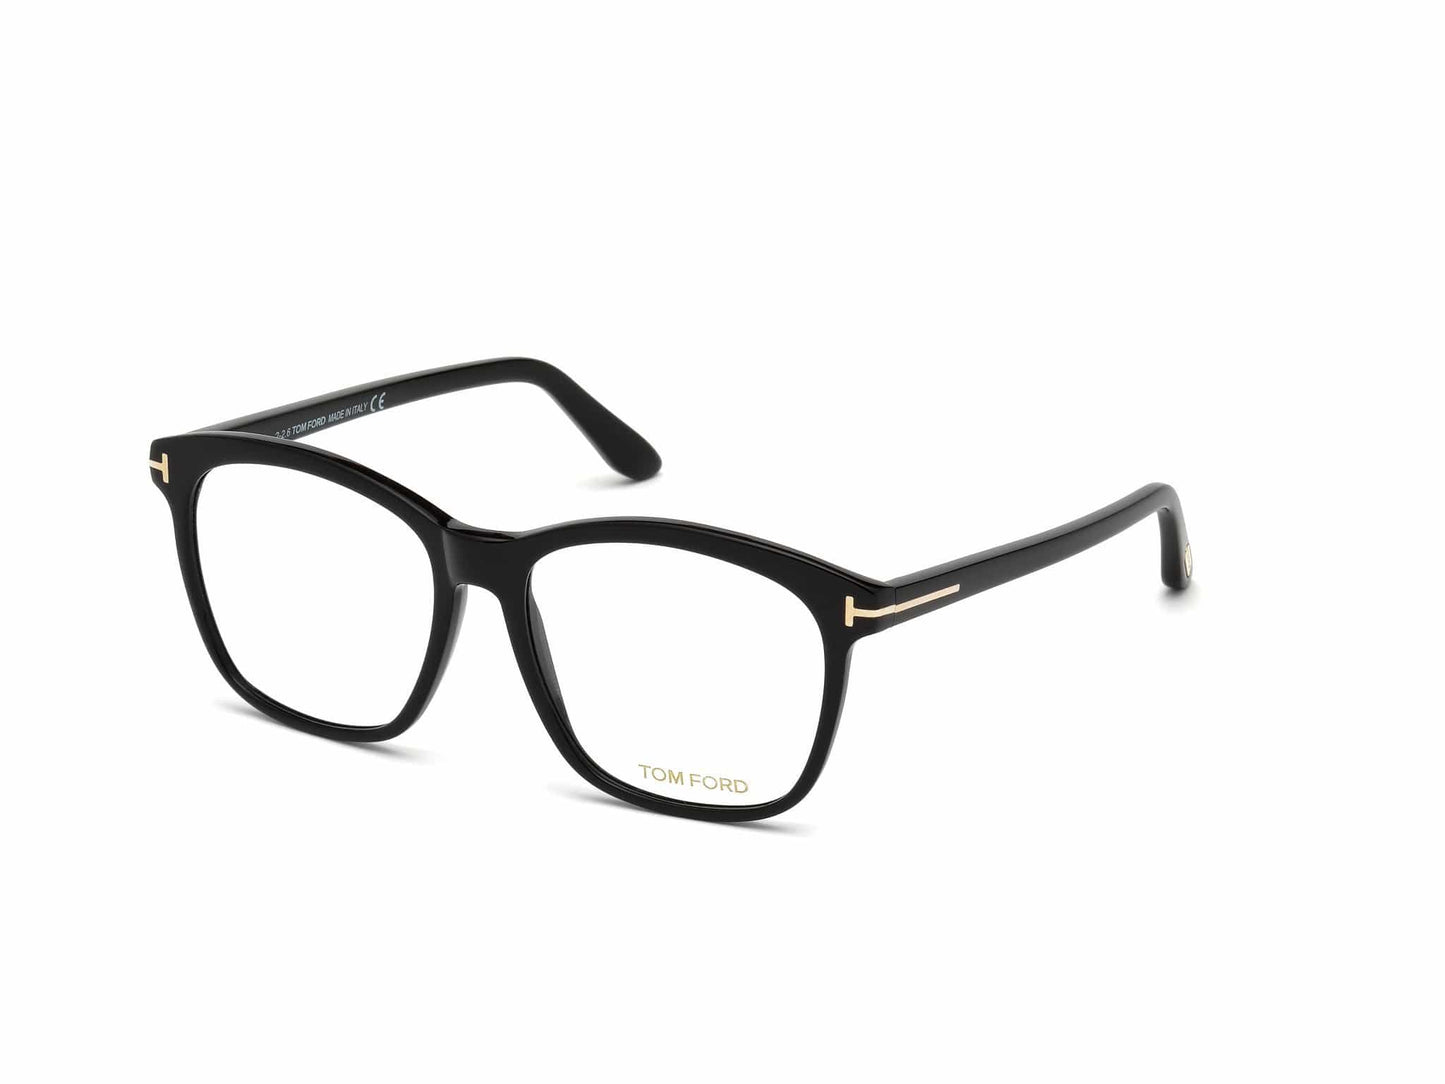 Tom Ford FT5481-B Geometric Eyeglasses 001-001 - Shiny Black/ Blue Block Lenses